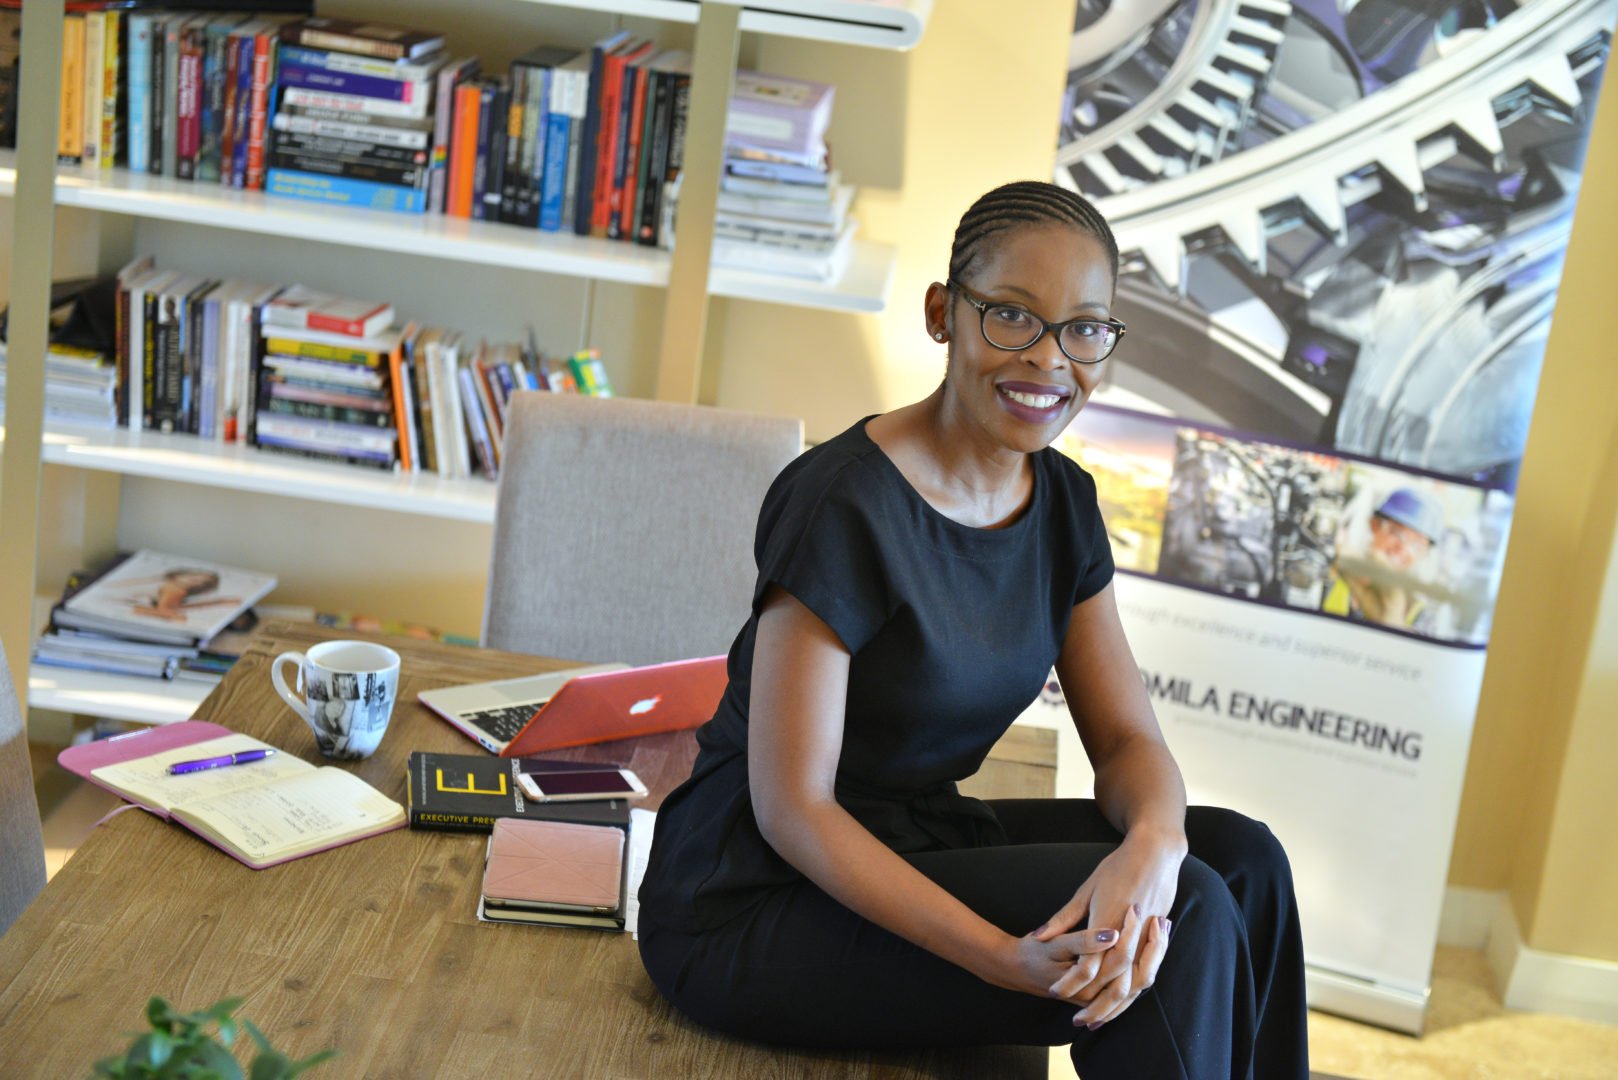 South African woman entrepreneur and mentee, Queen Mokulubete